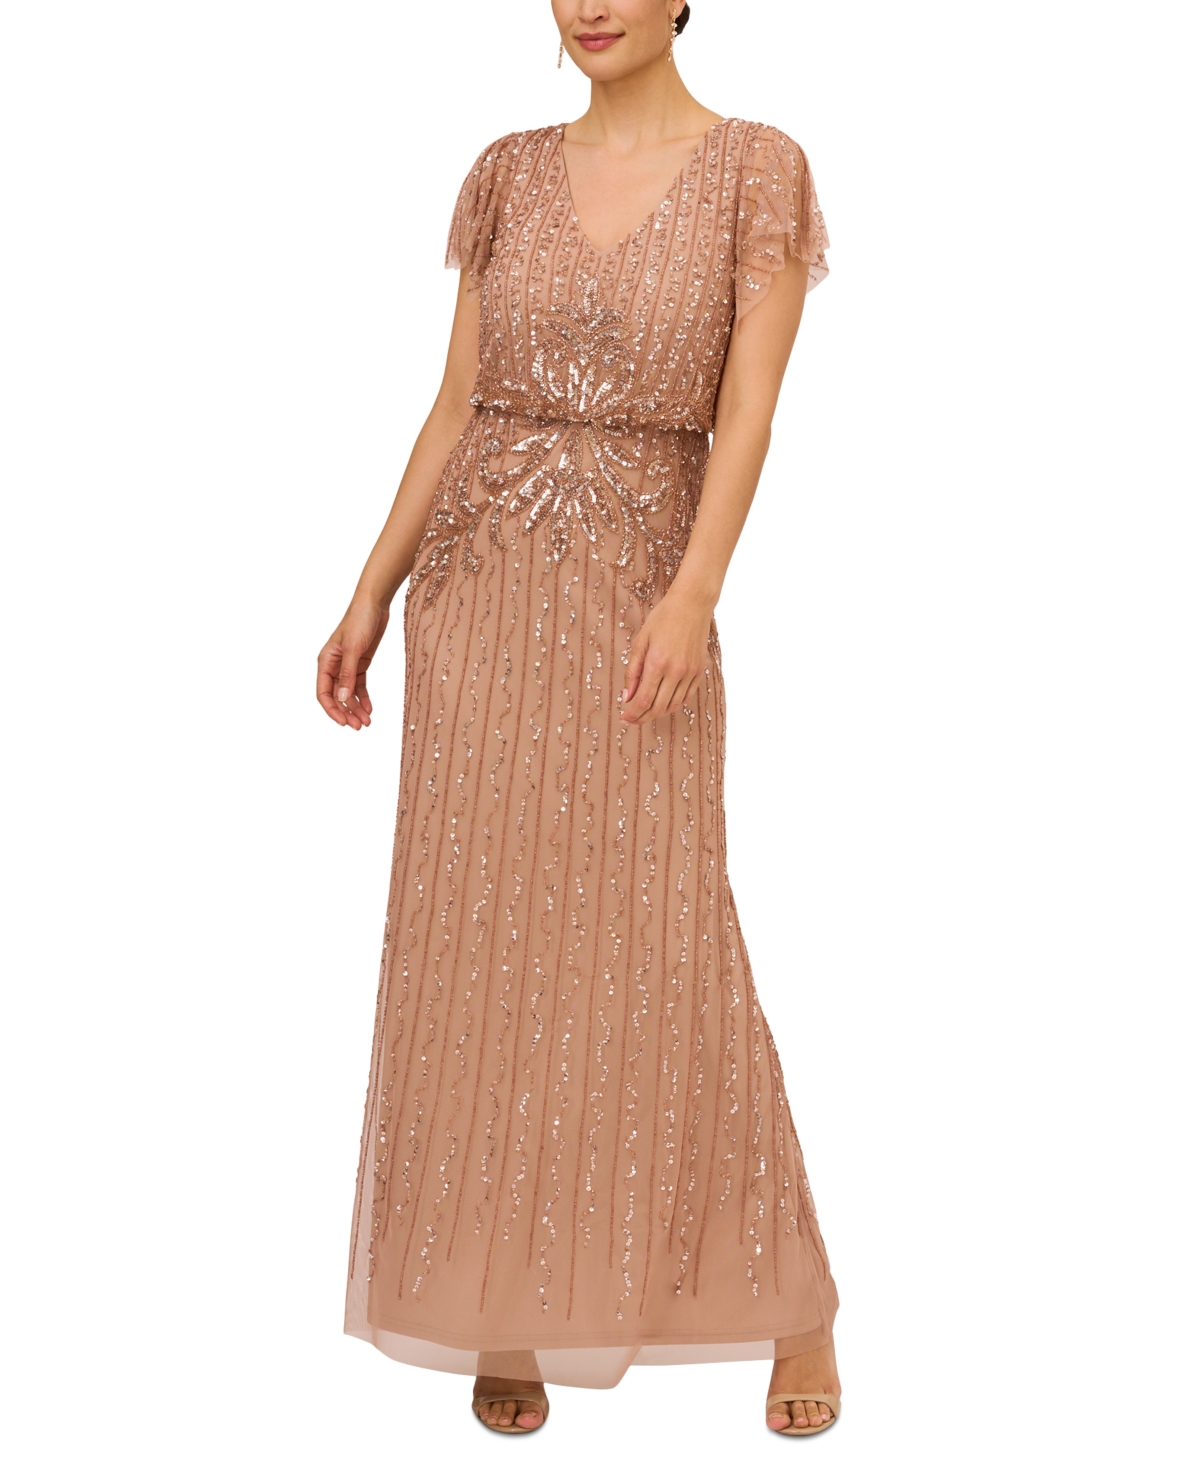 Buy Boardwalk Empire Inspired Dresses Adrianna Papell Womens Beaded Flutter-Sleeve Gown - Rose Gold $249.00 AT vintagedancer.com